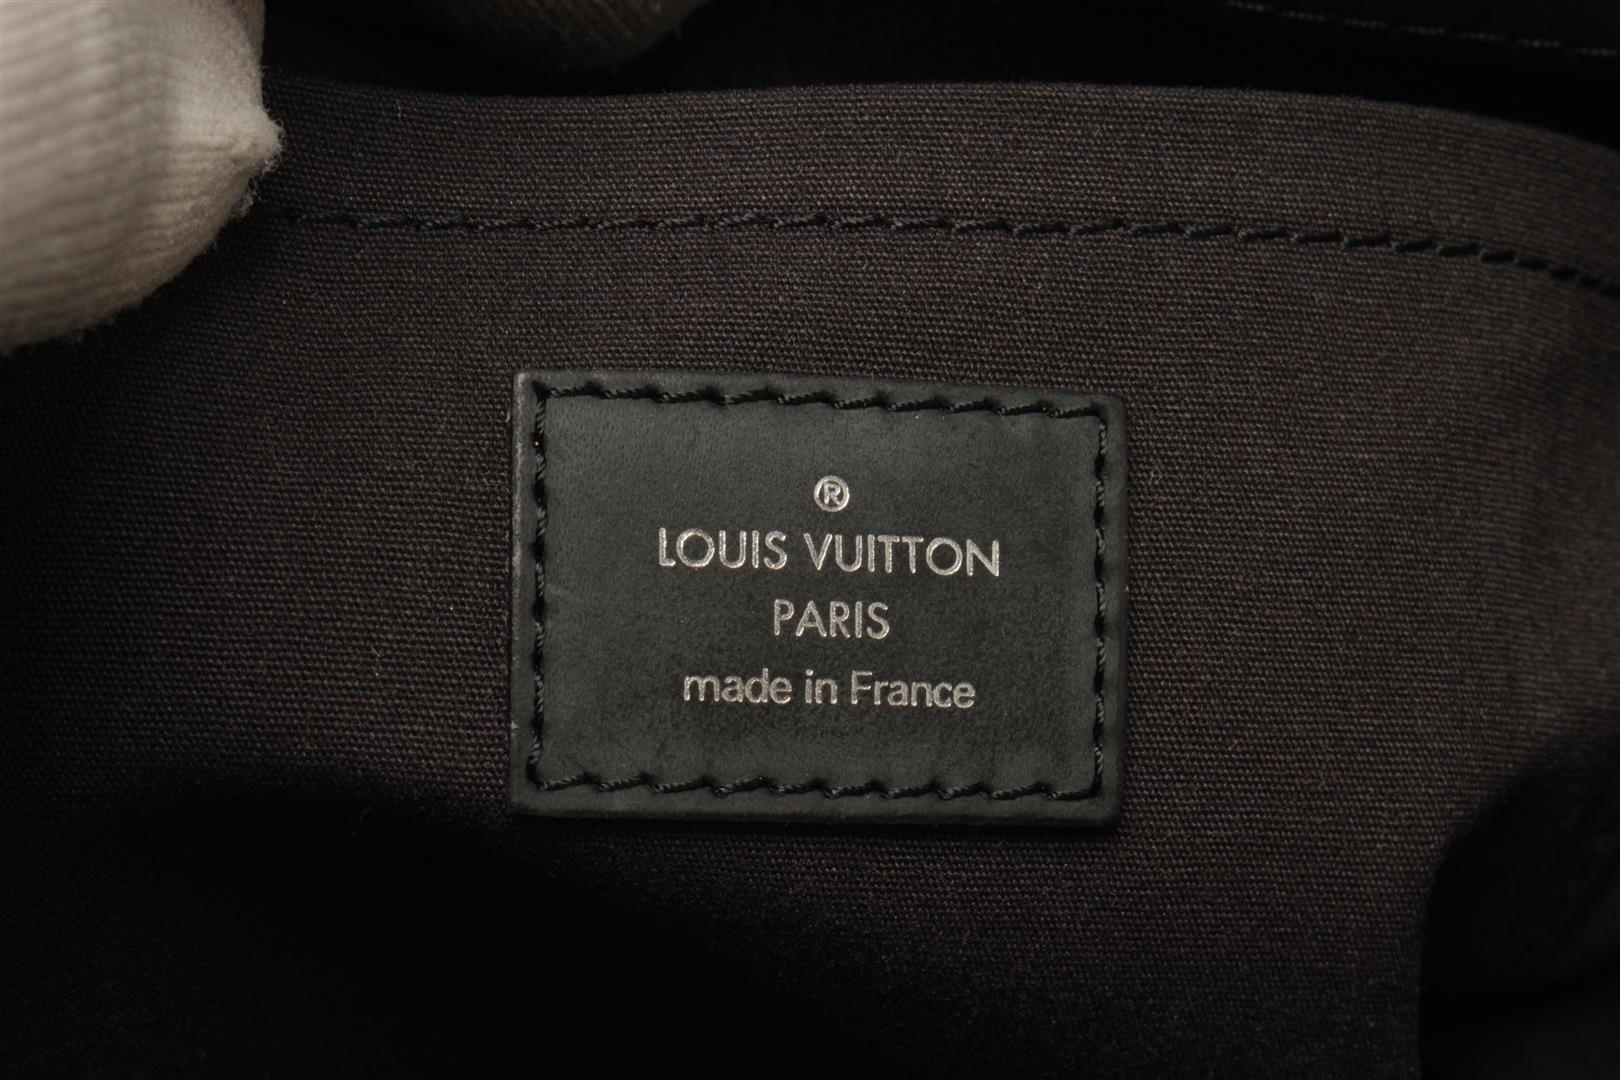 Louis Vuitton Black Epi Leather Passy Handbag